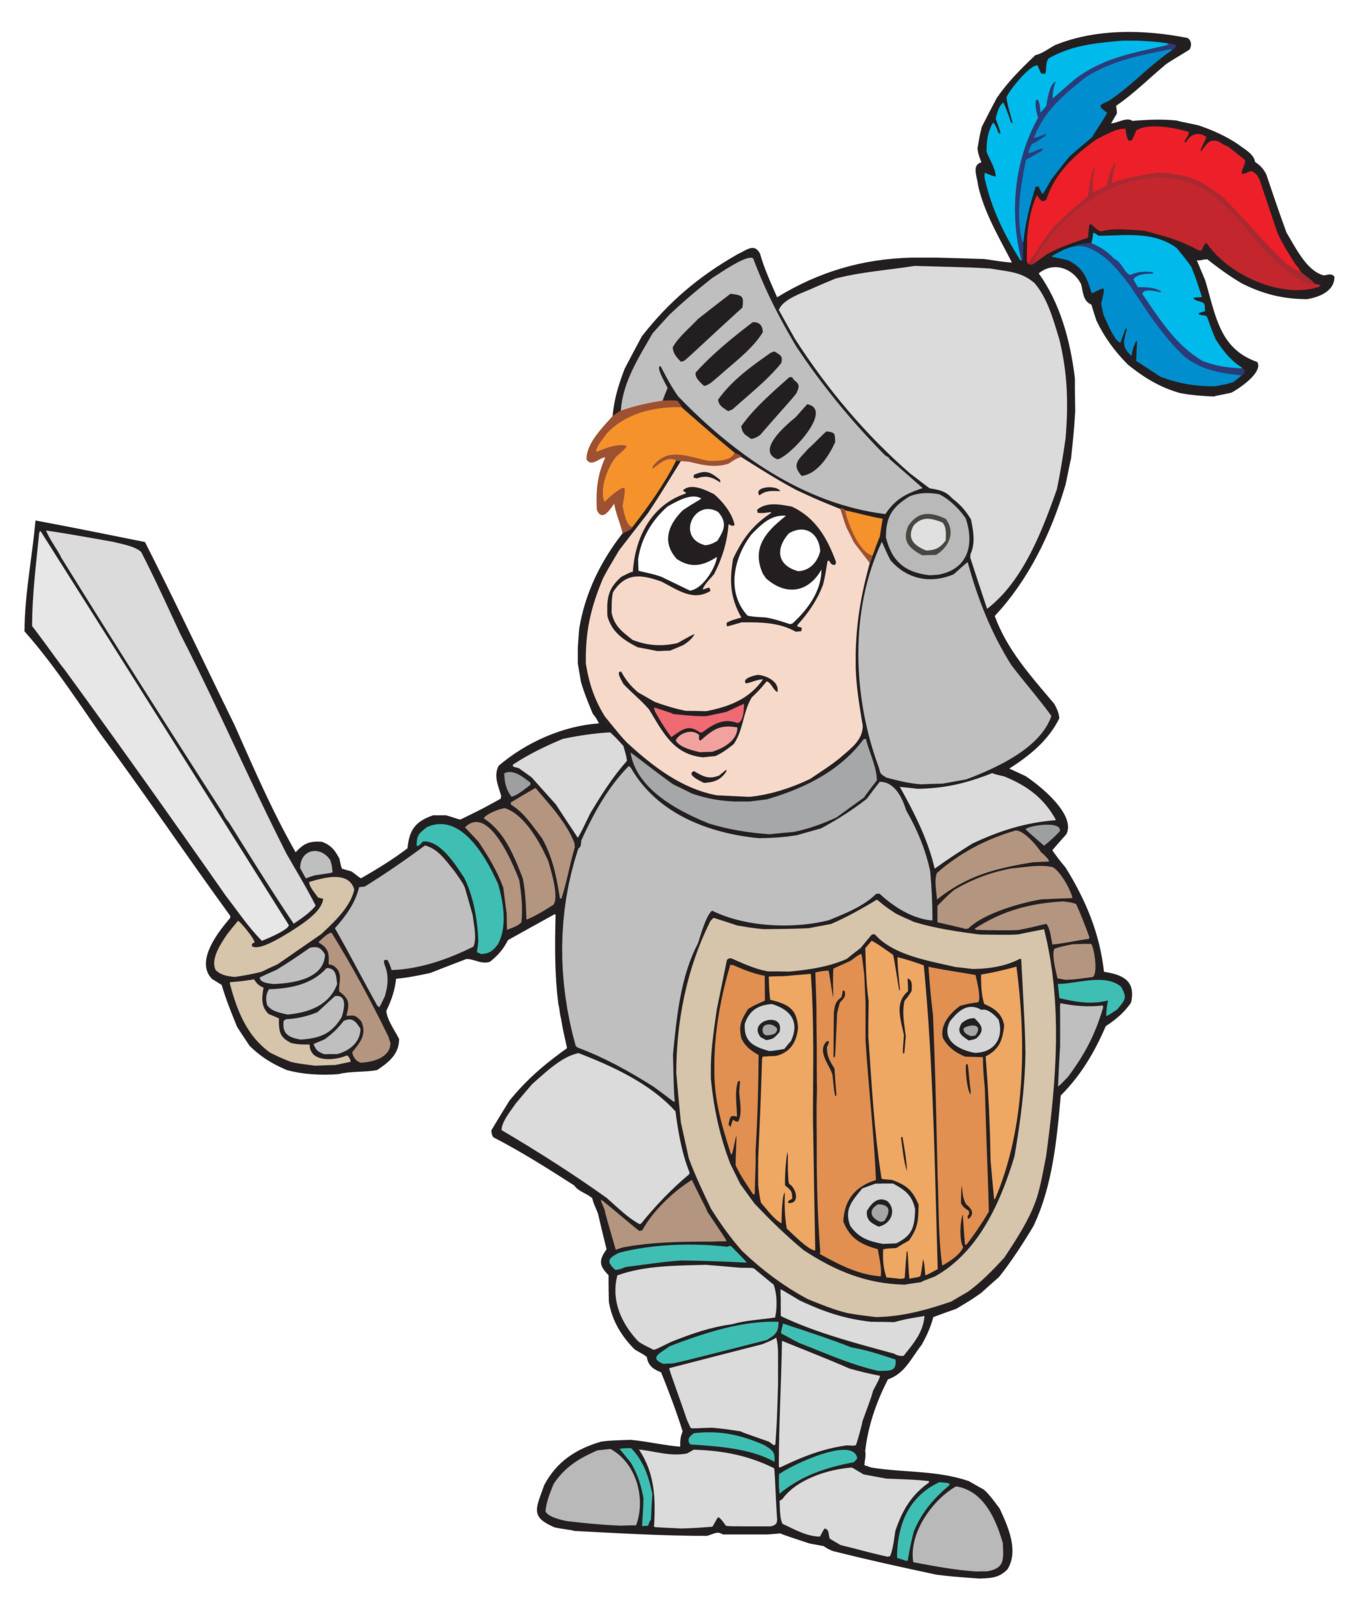 Cartoon knight on white background - vector illustration.